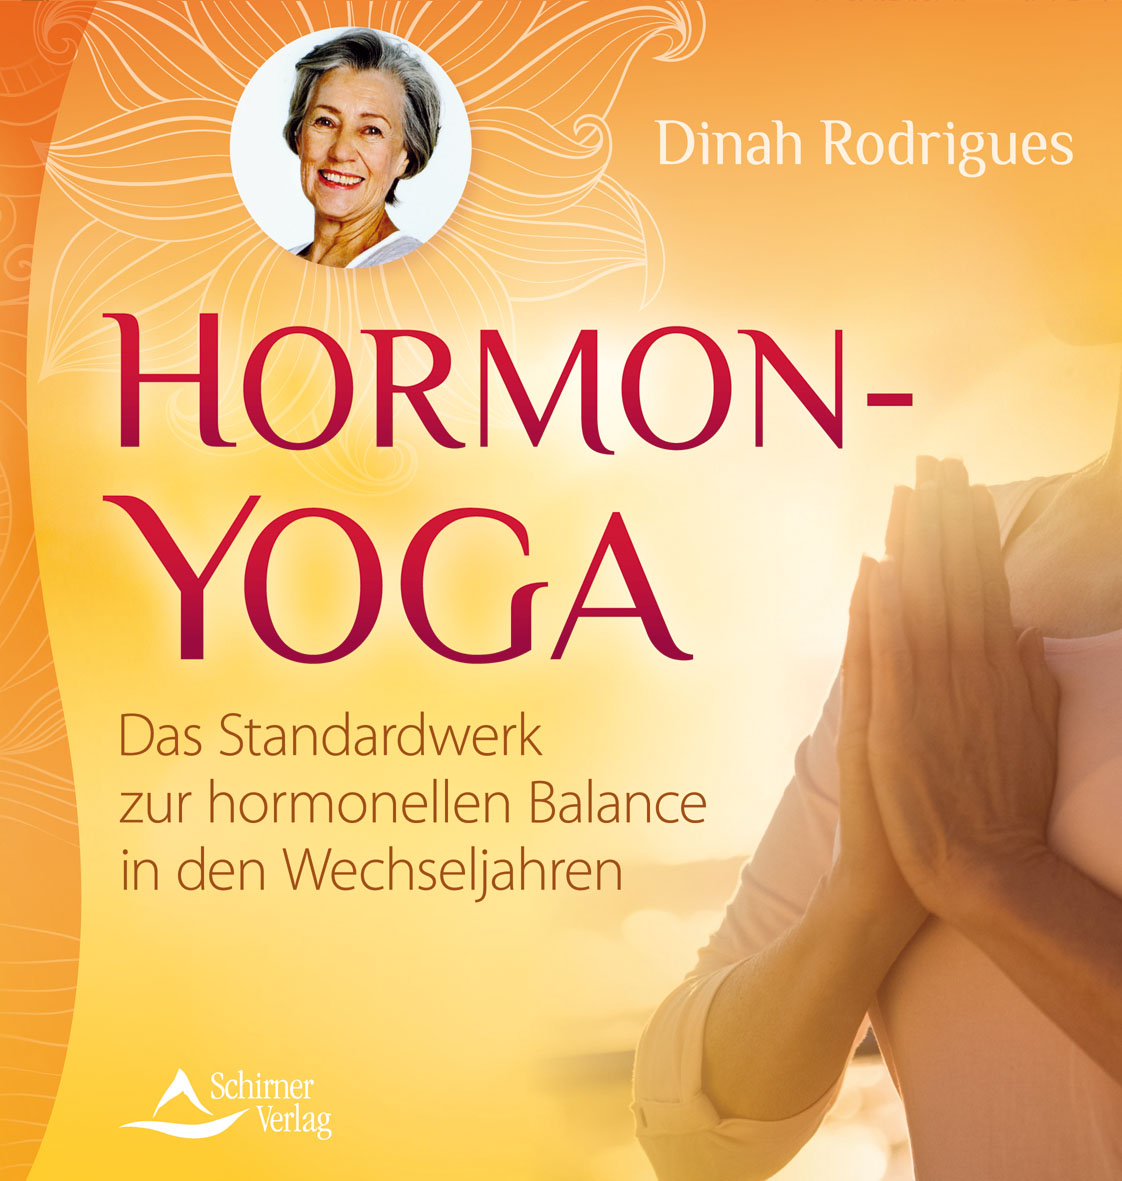 Hormon-Yoga Dinah Rodrigues  - Bild 1 von 1